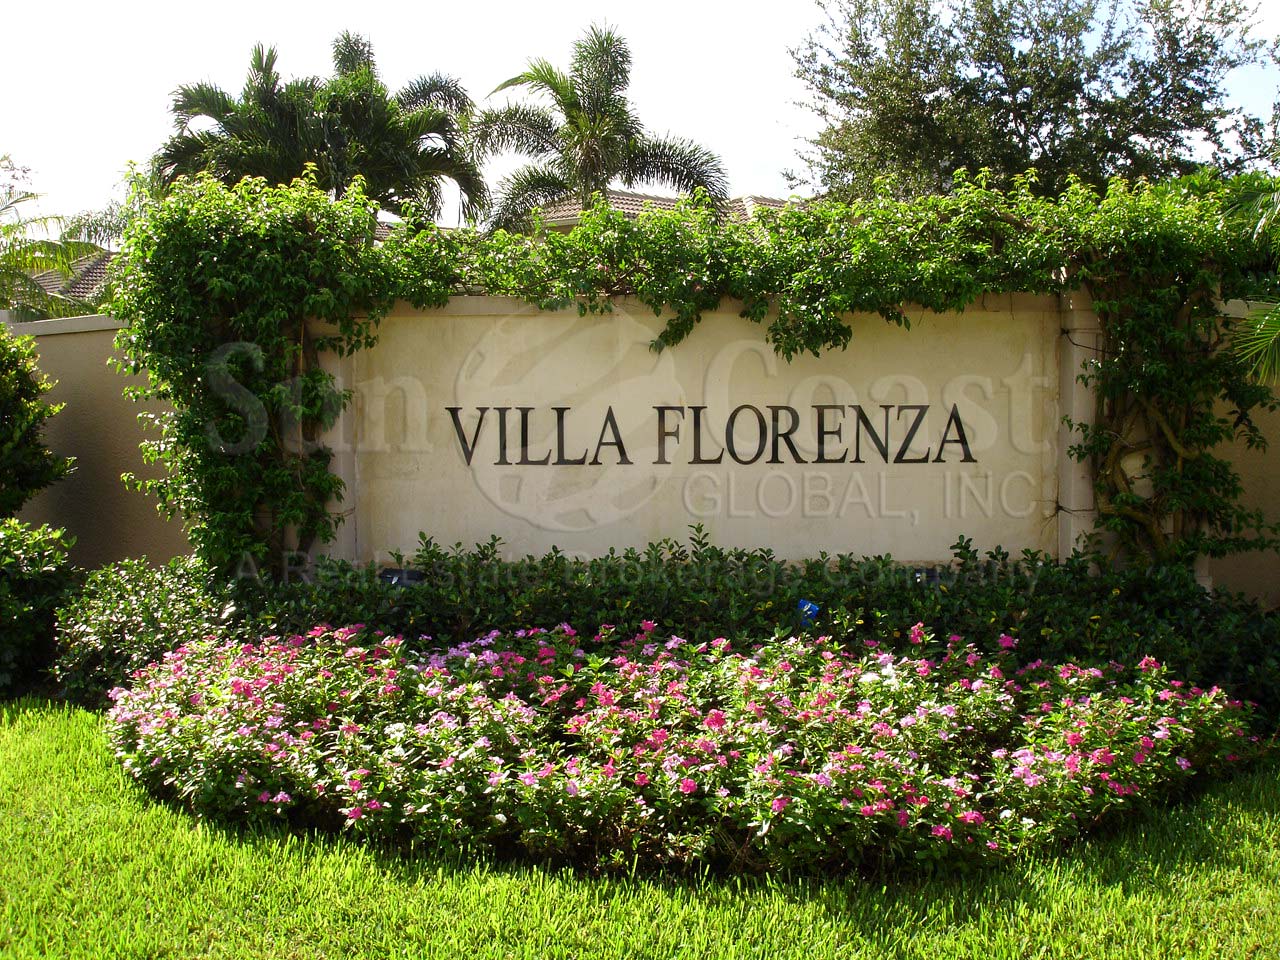 Villa Florenza signage